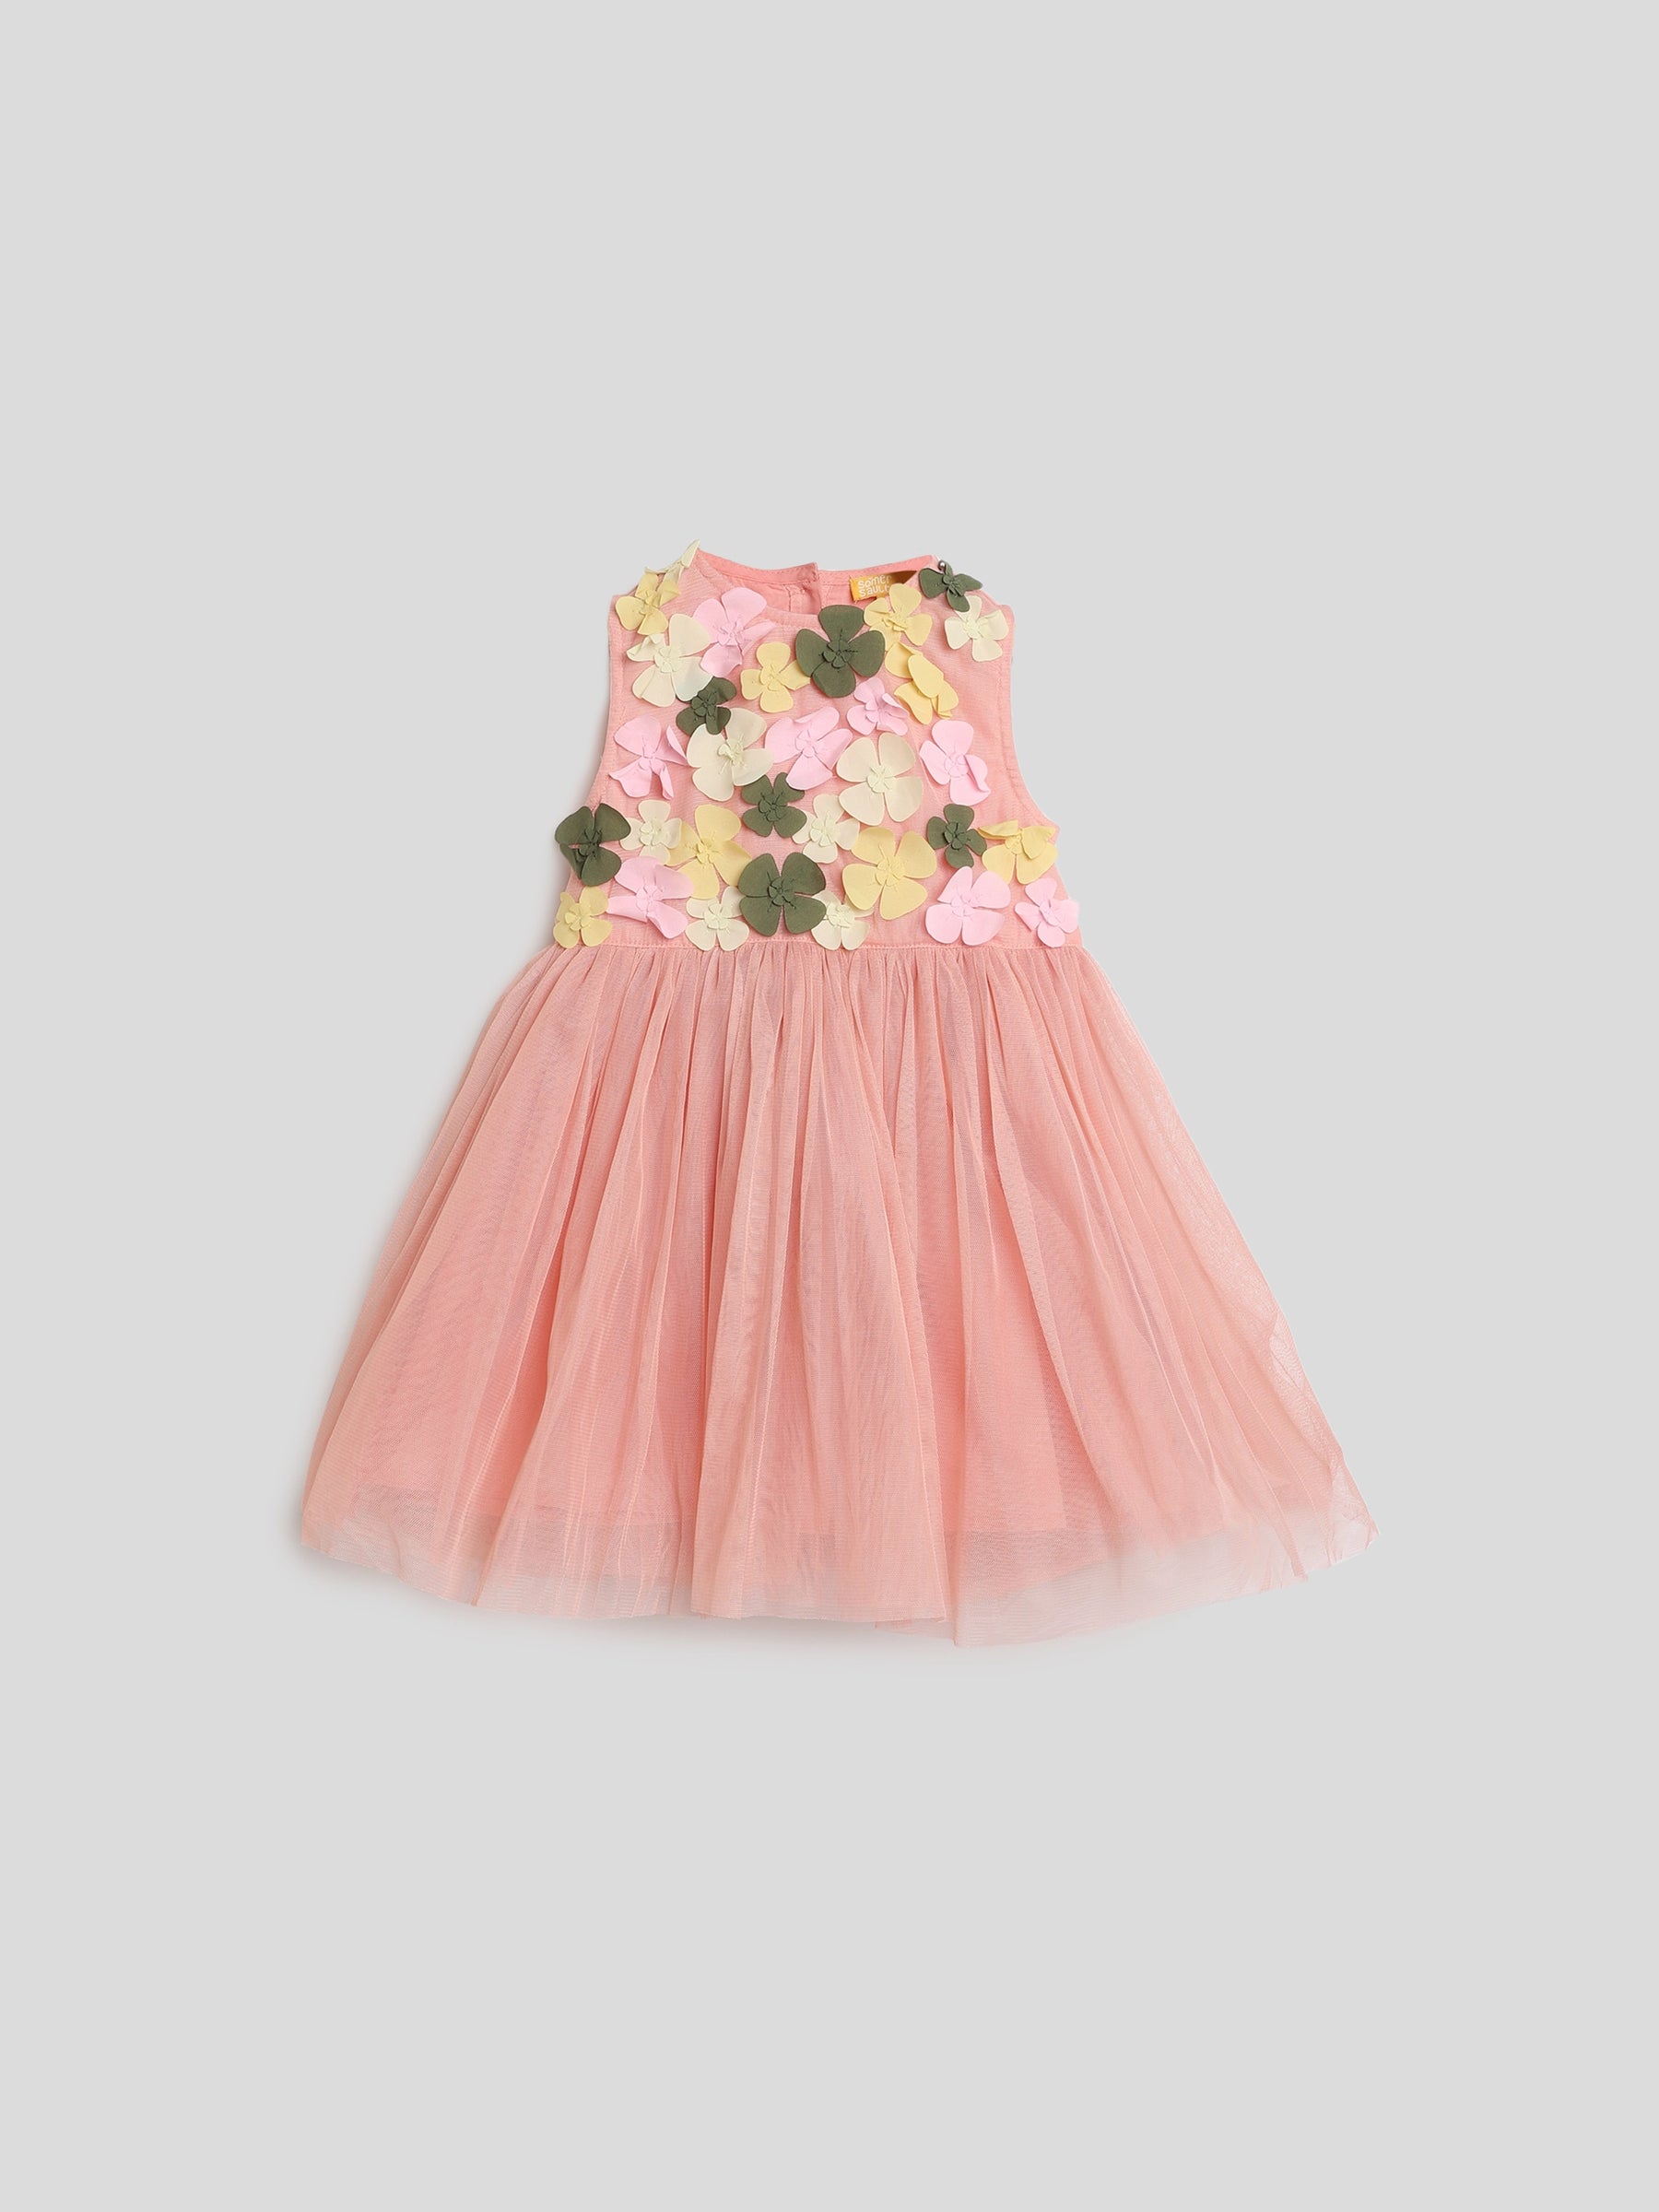 Pink Floral Tulle Dress Somersault